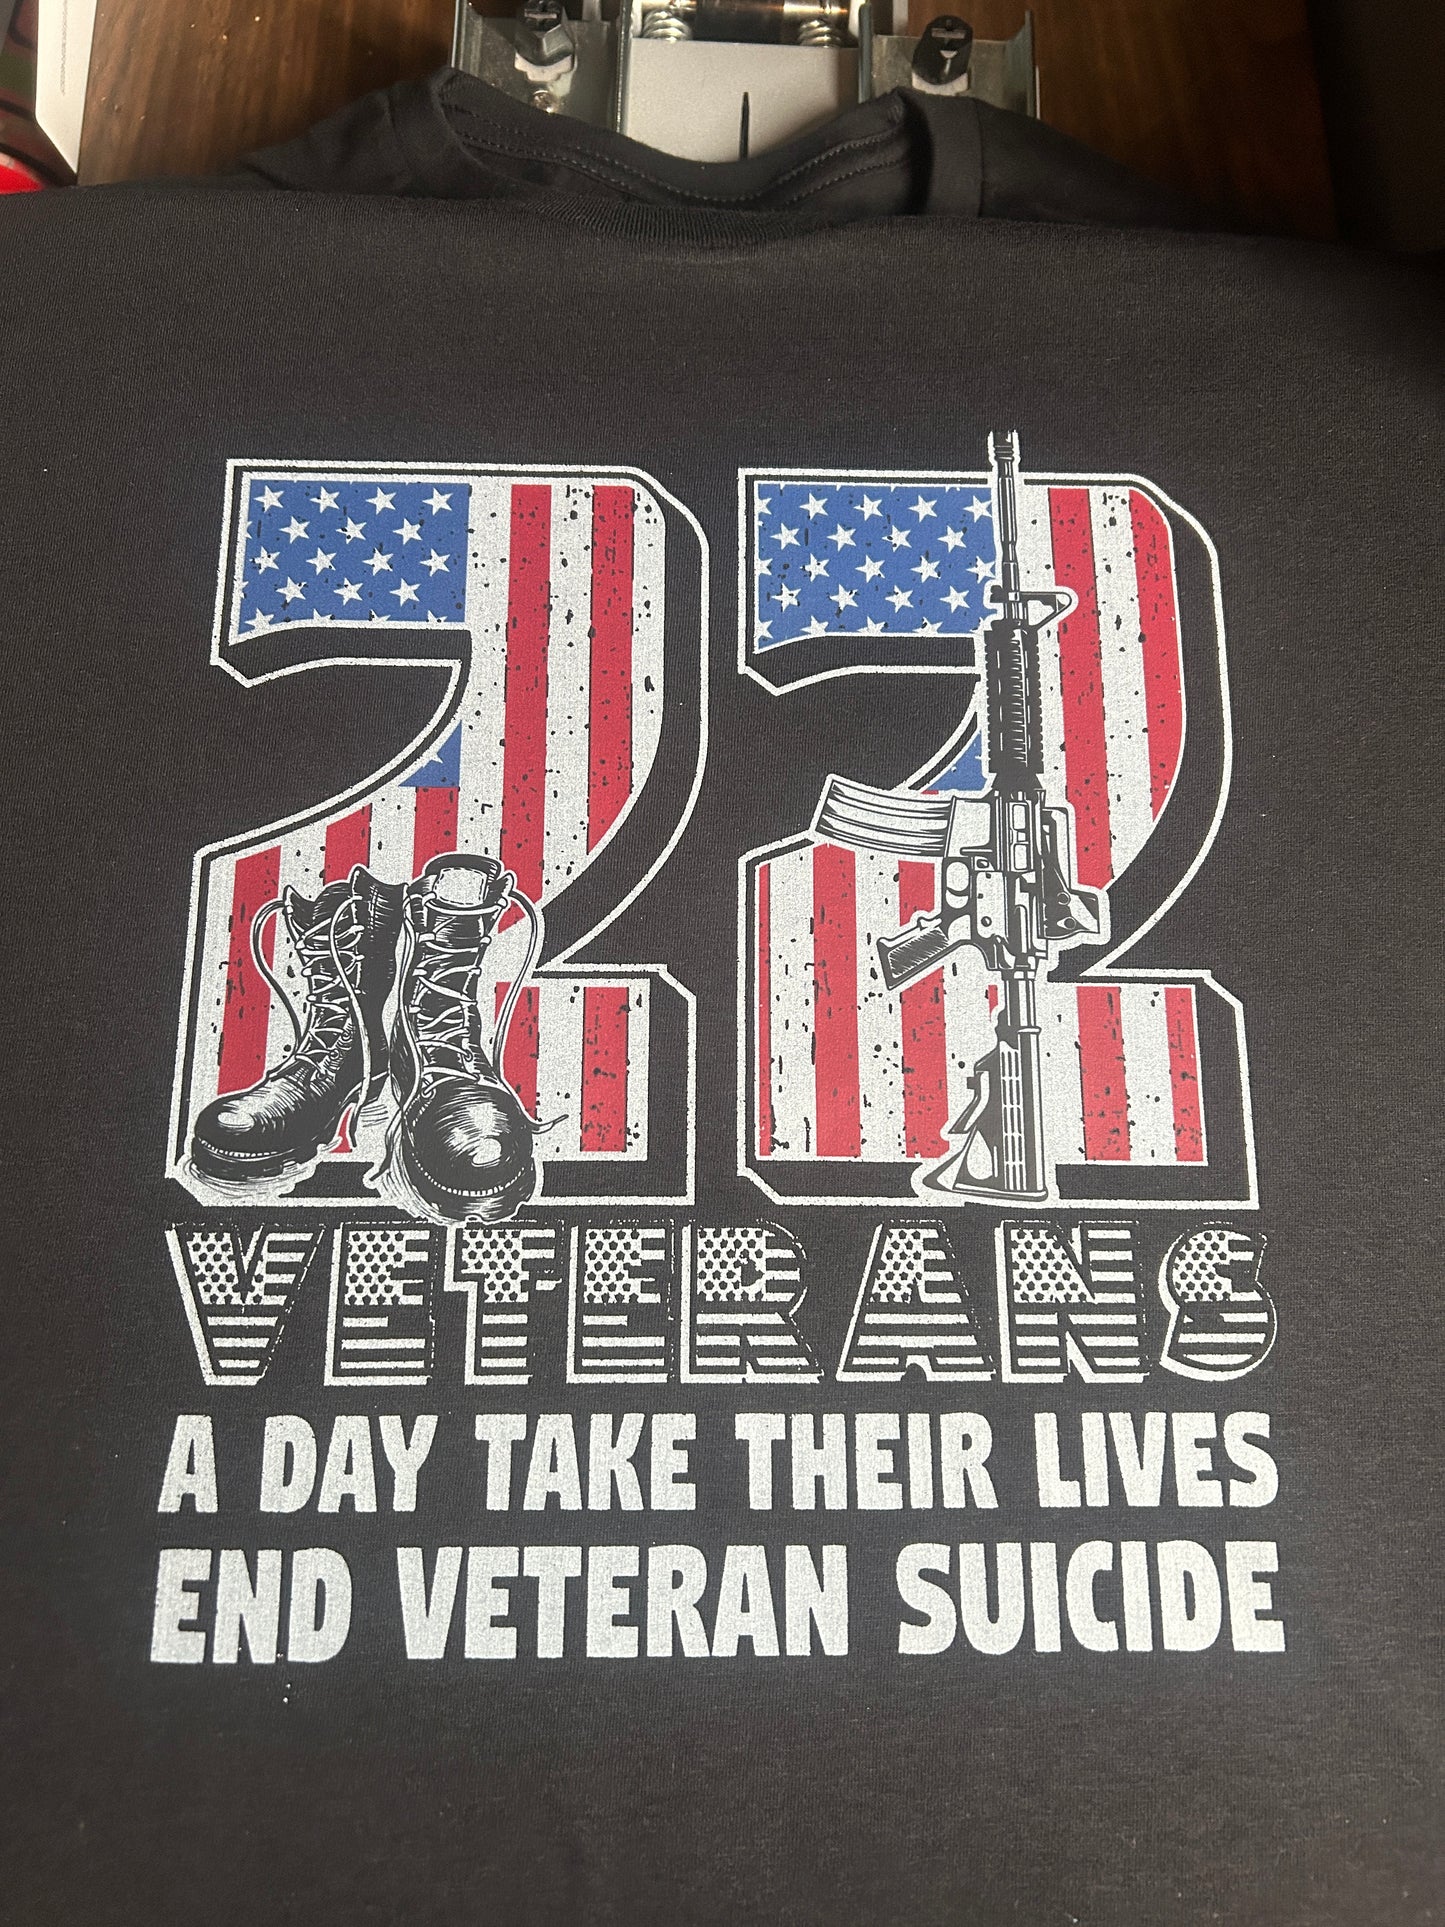 22 Veterans